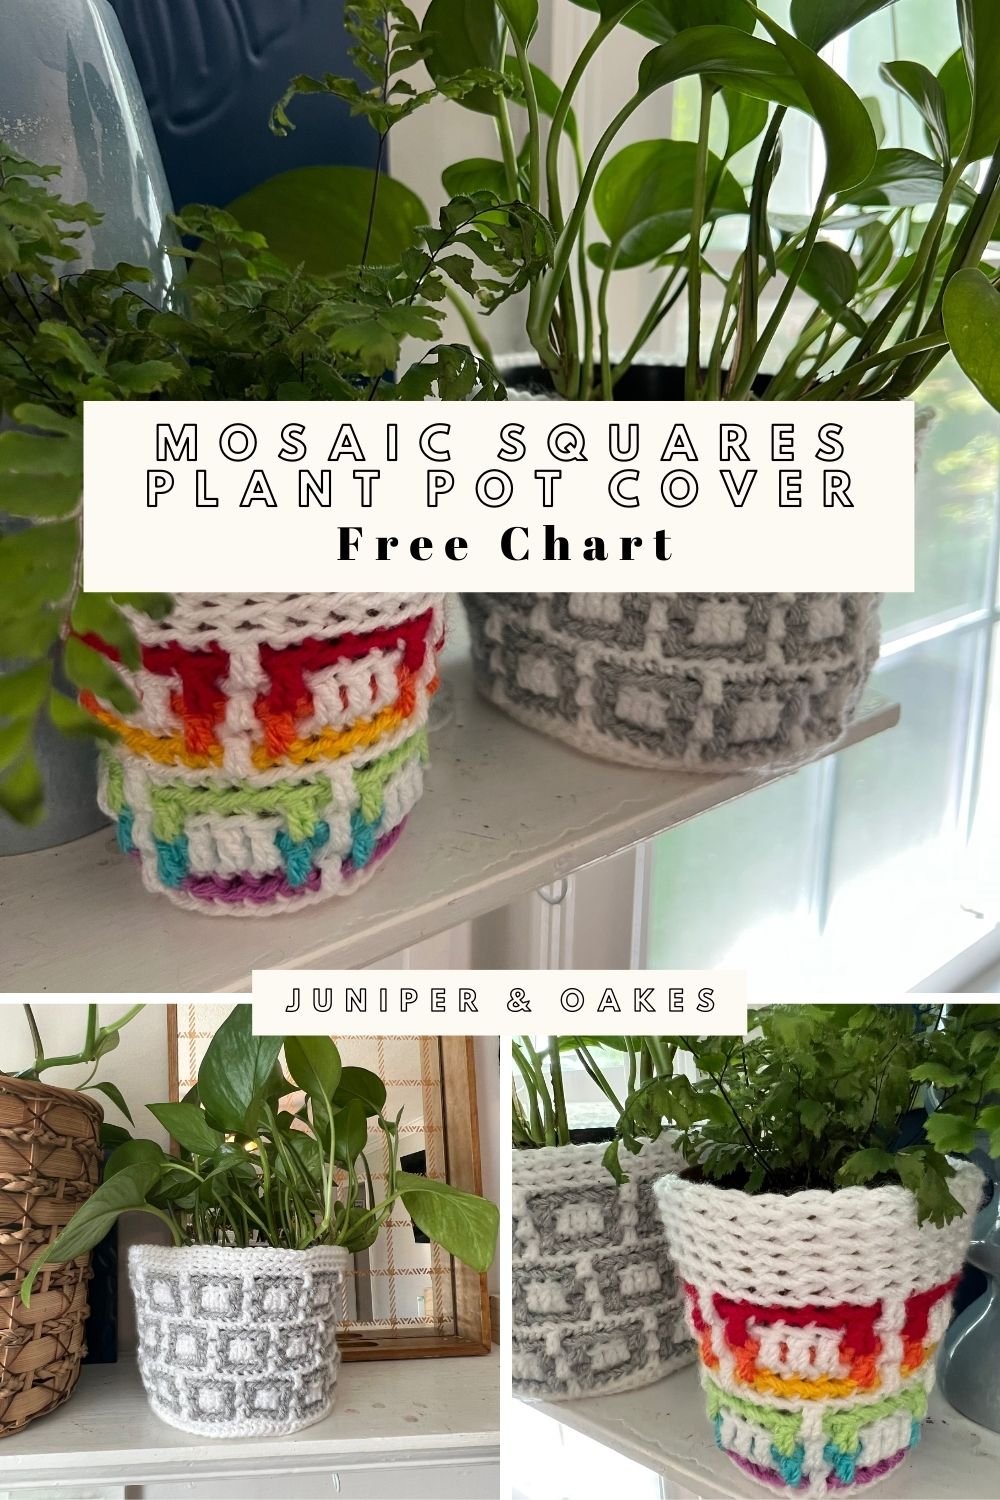 Mosaic Squares Plant Pot Cover pin